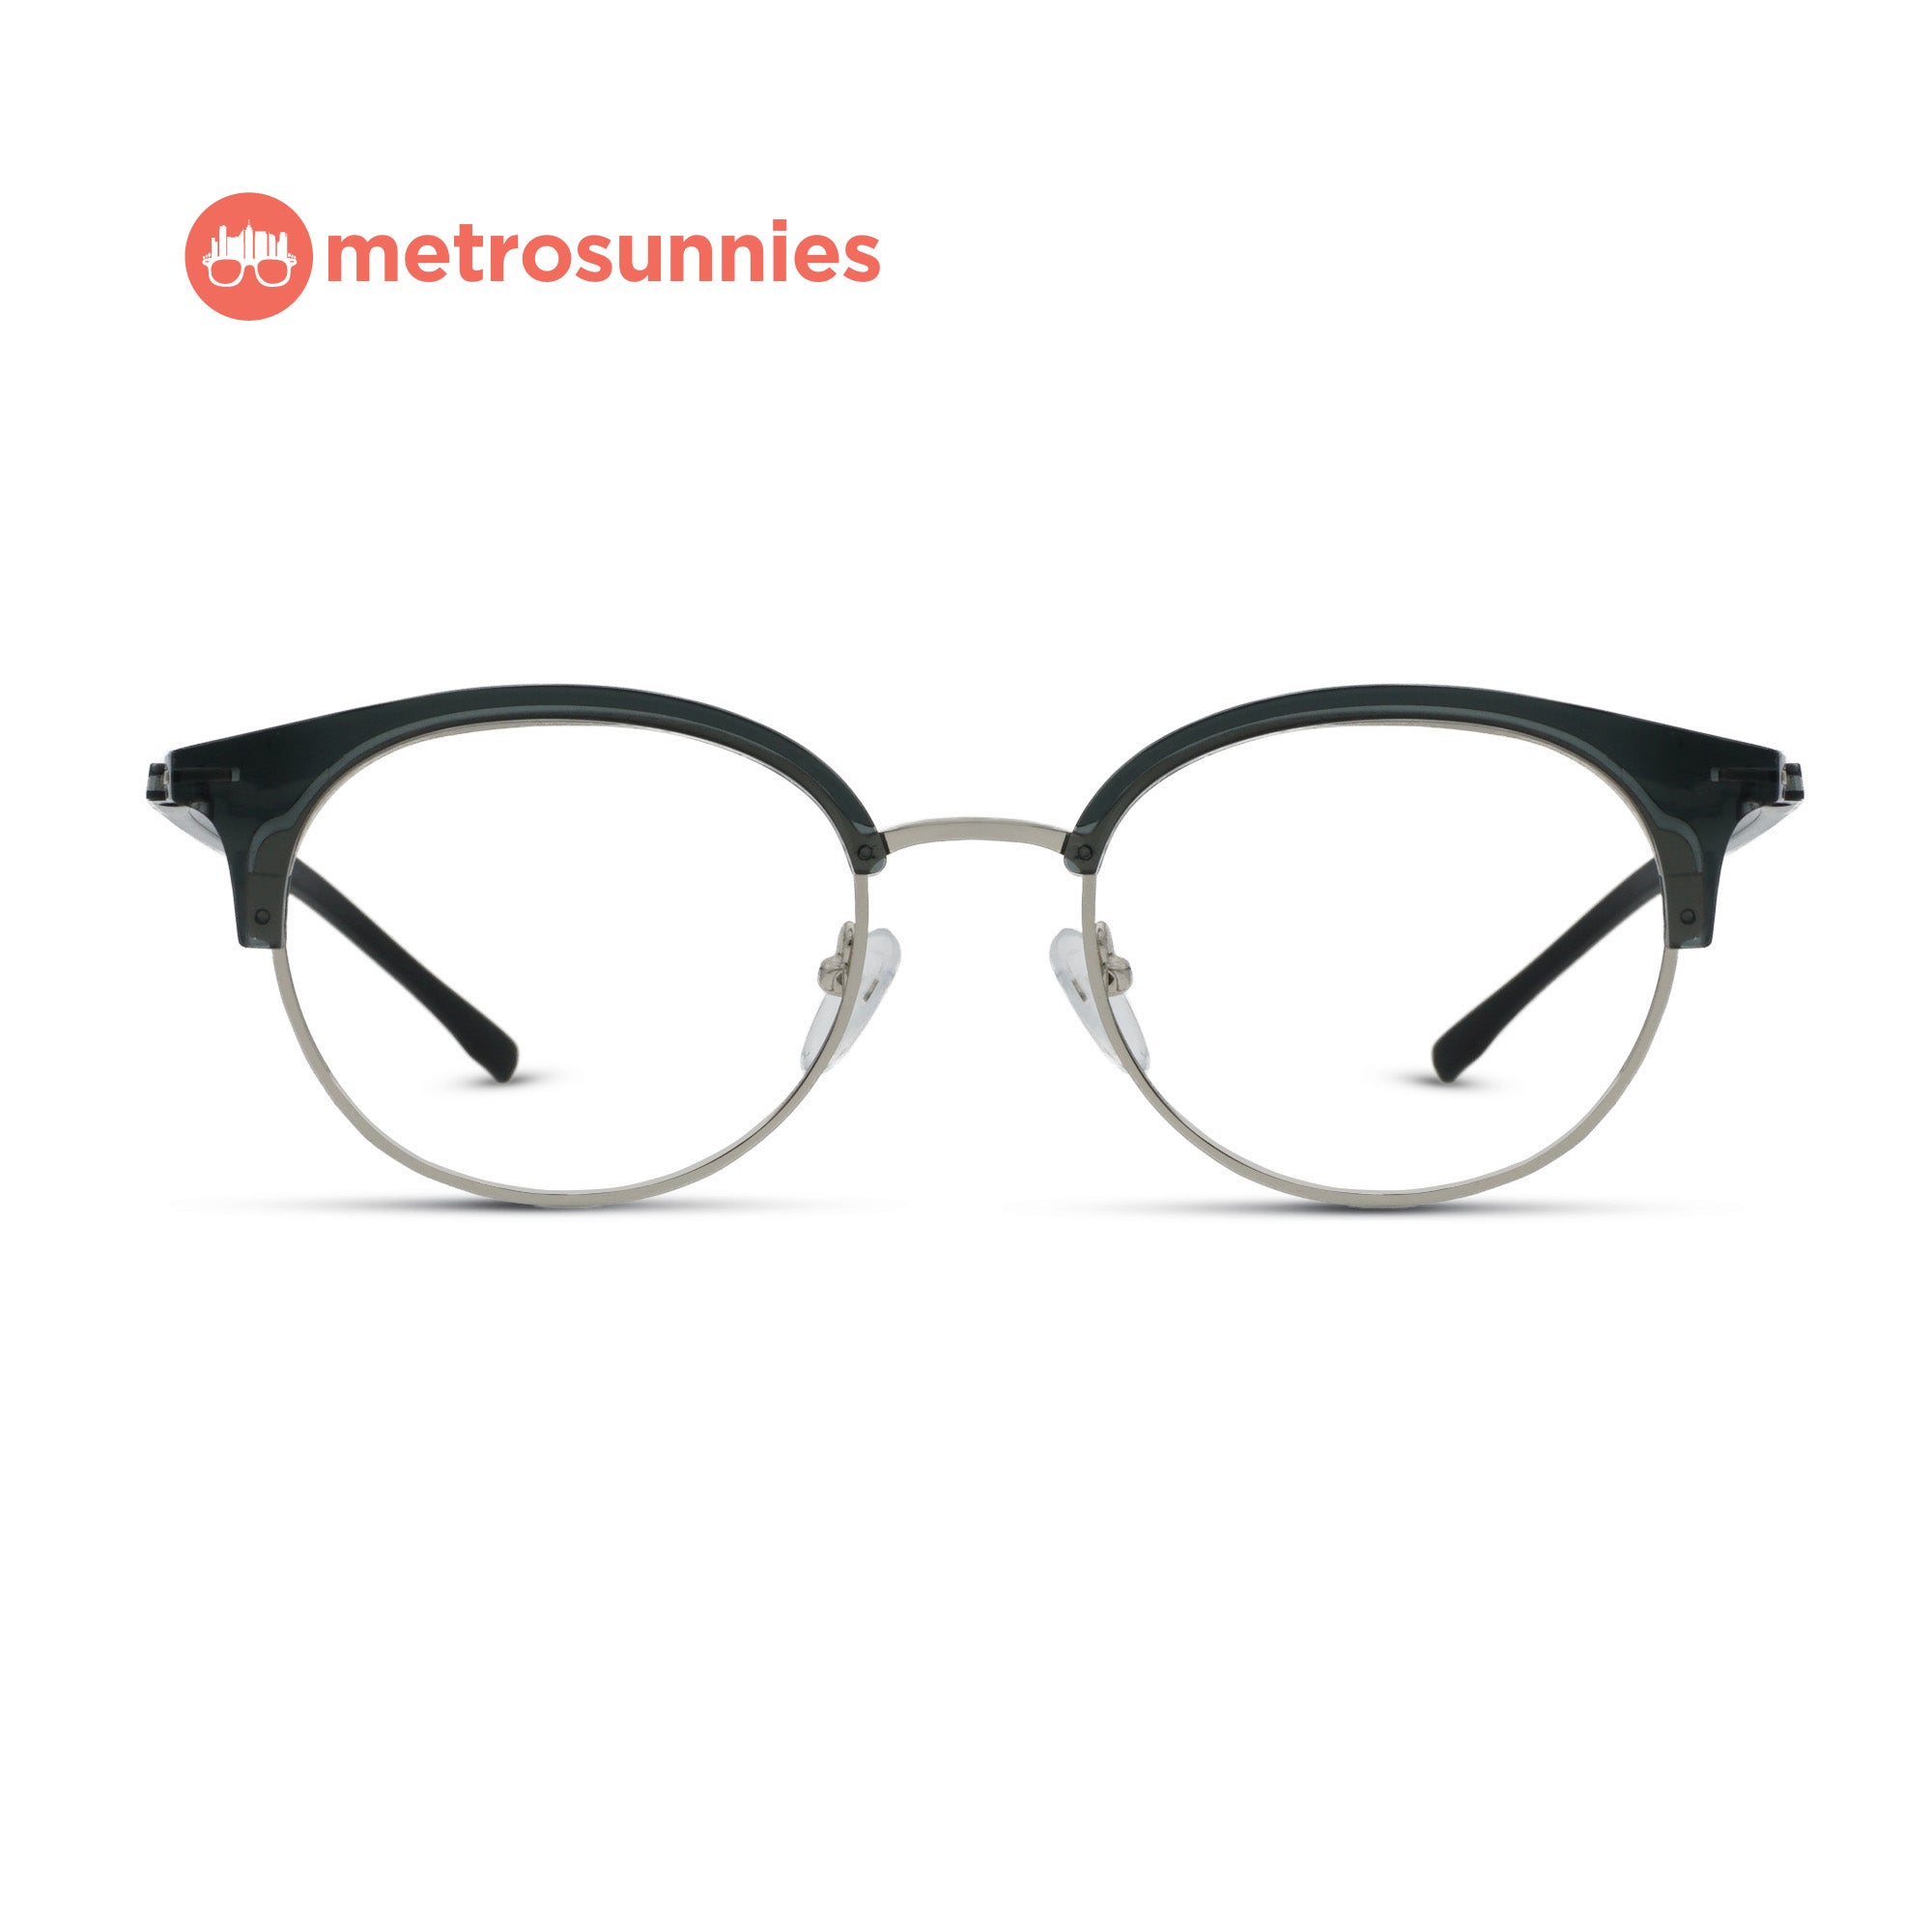 MetroSunnies Logan Specs (Gray) / Replaceable Lens / Versairy Ultralight Weight / Eyeglasses